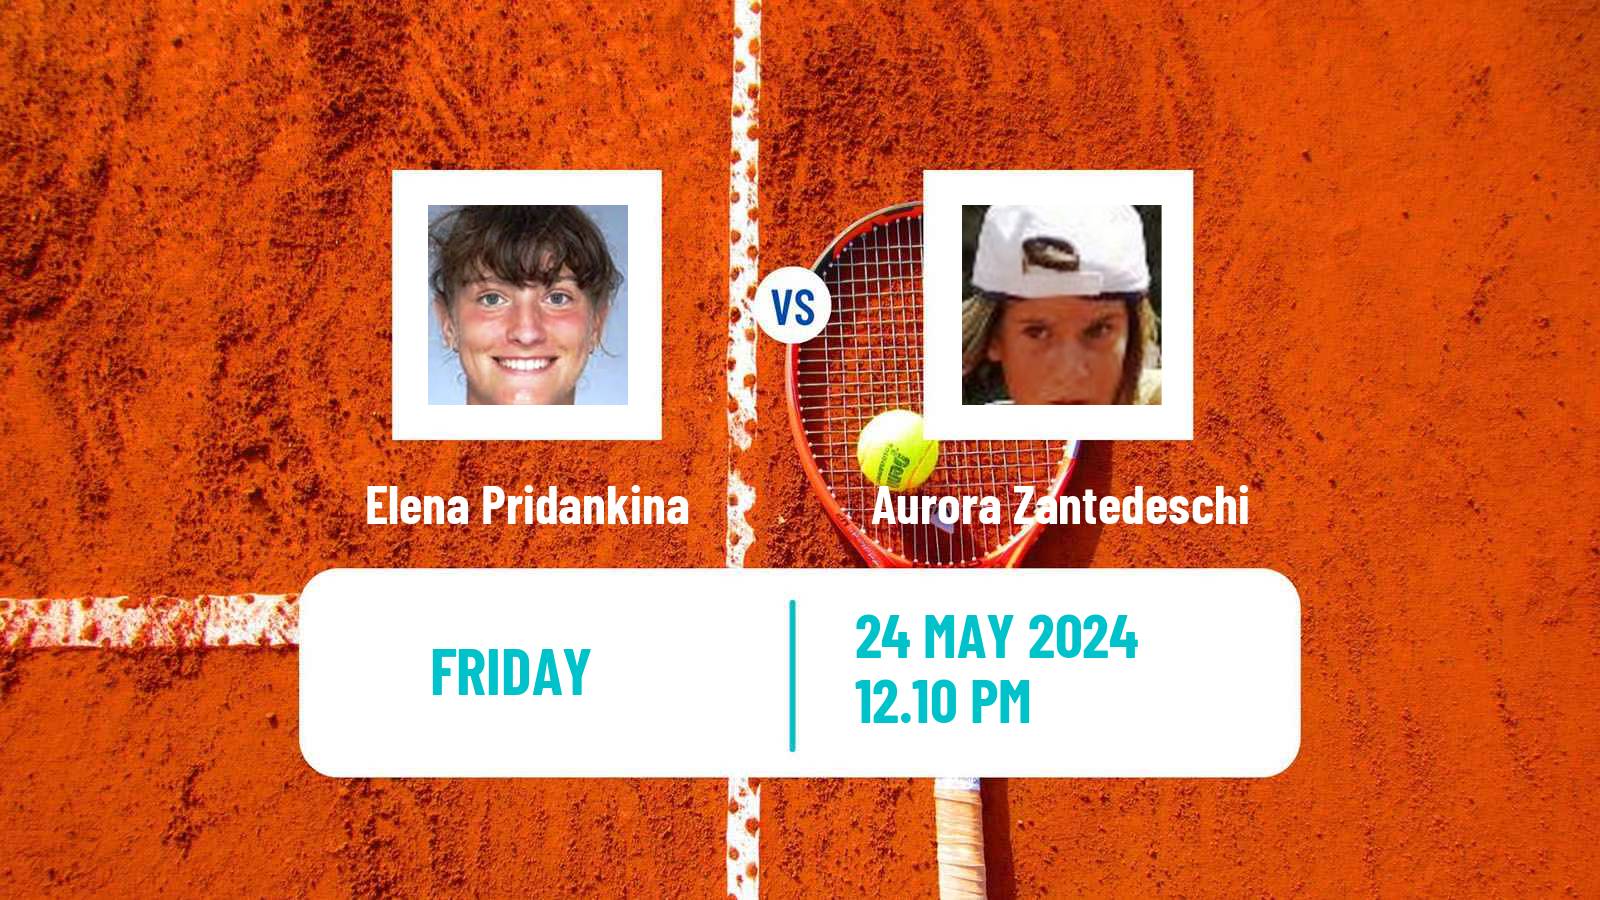 Tennis ITF W75 Grado Women Elena Pridankina - Aurora Zantedeschi